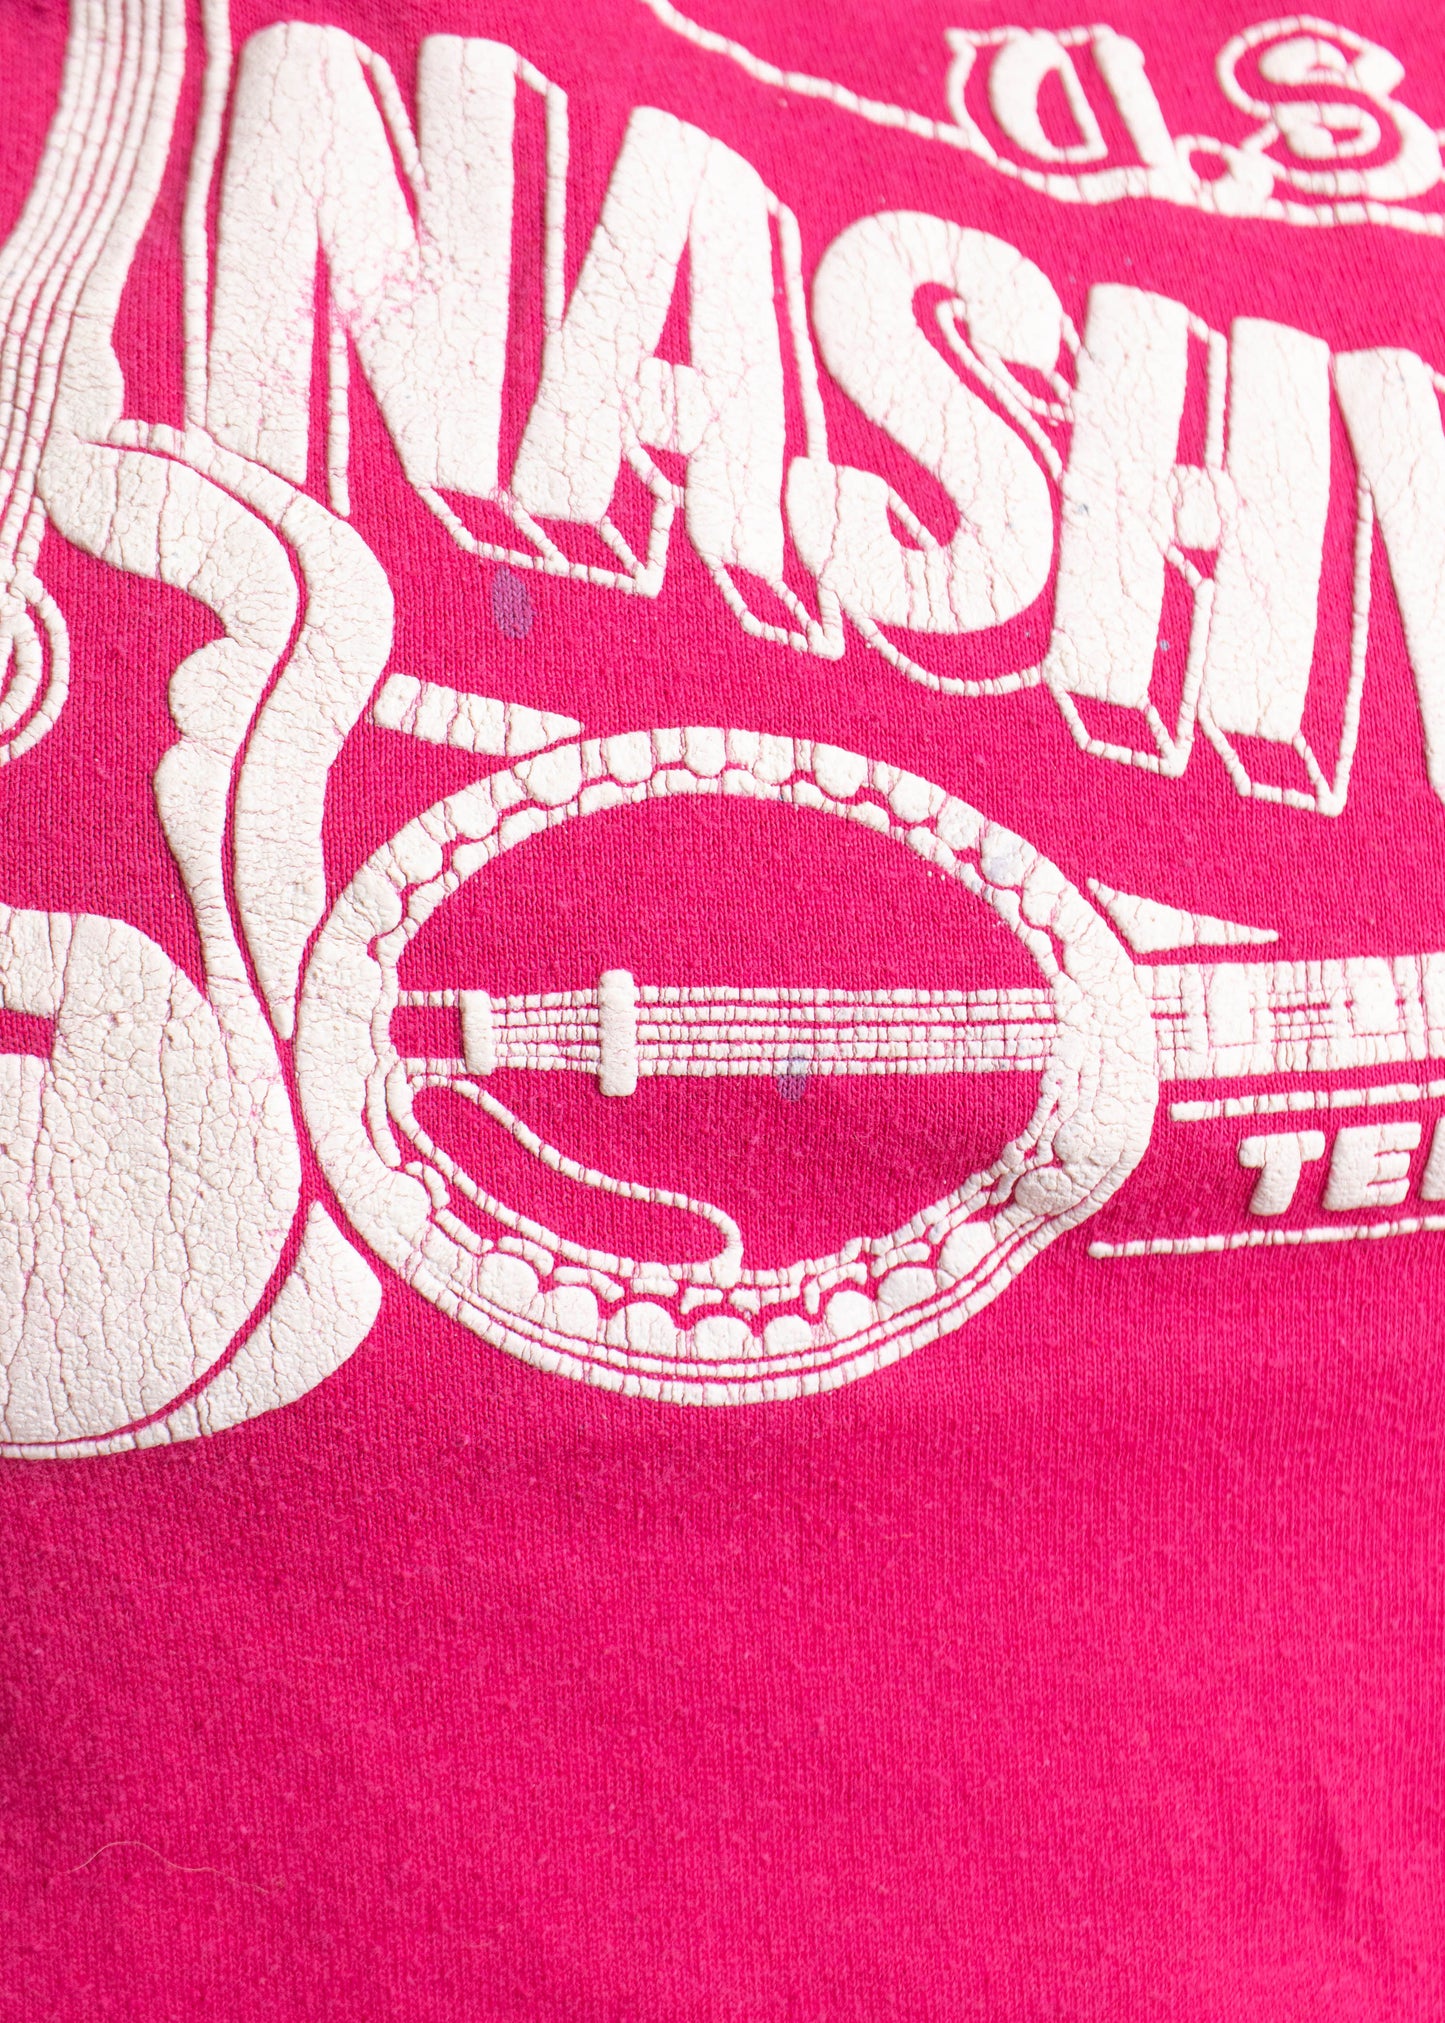 1980s Jerzees Nashville Tennesee Souvenir T-Shirt Size S/M